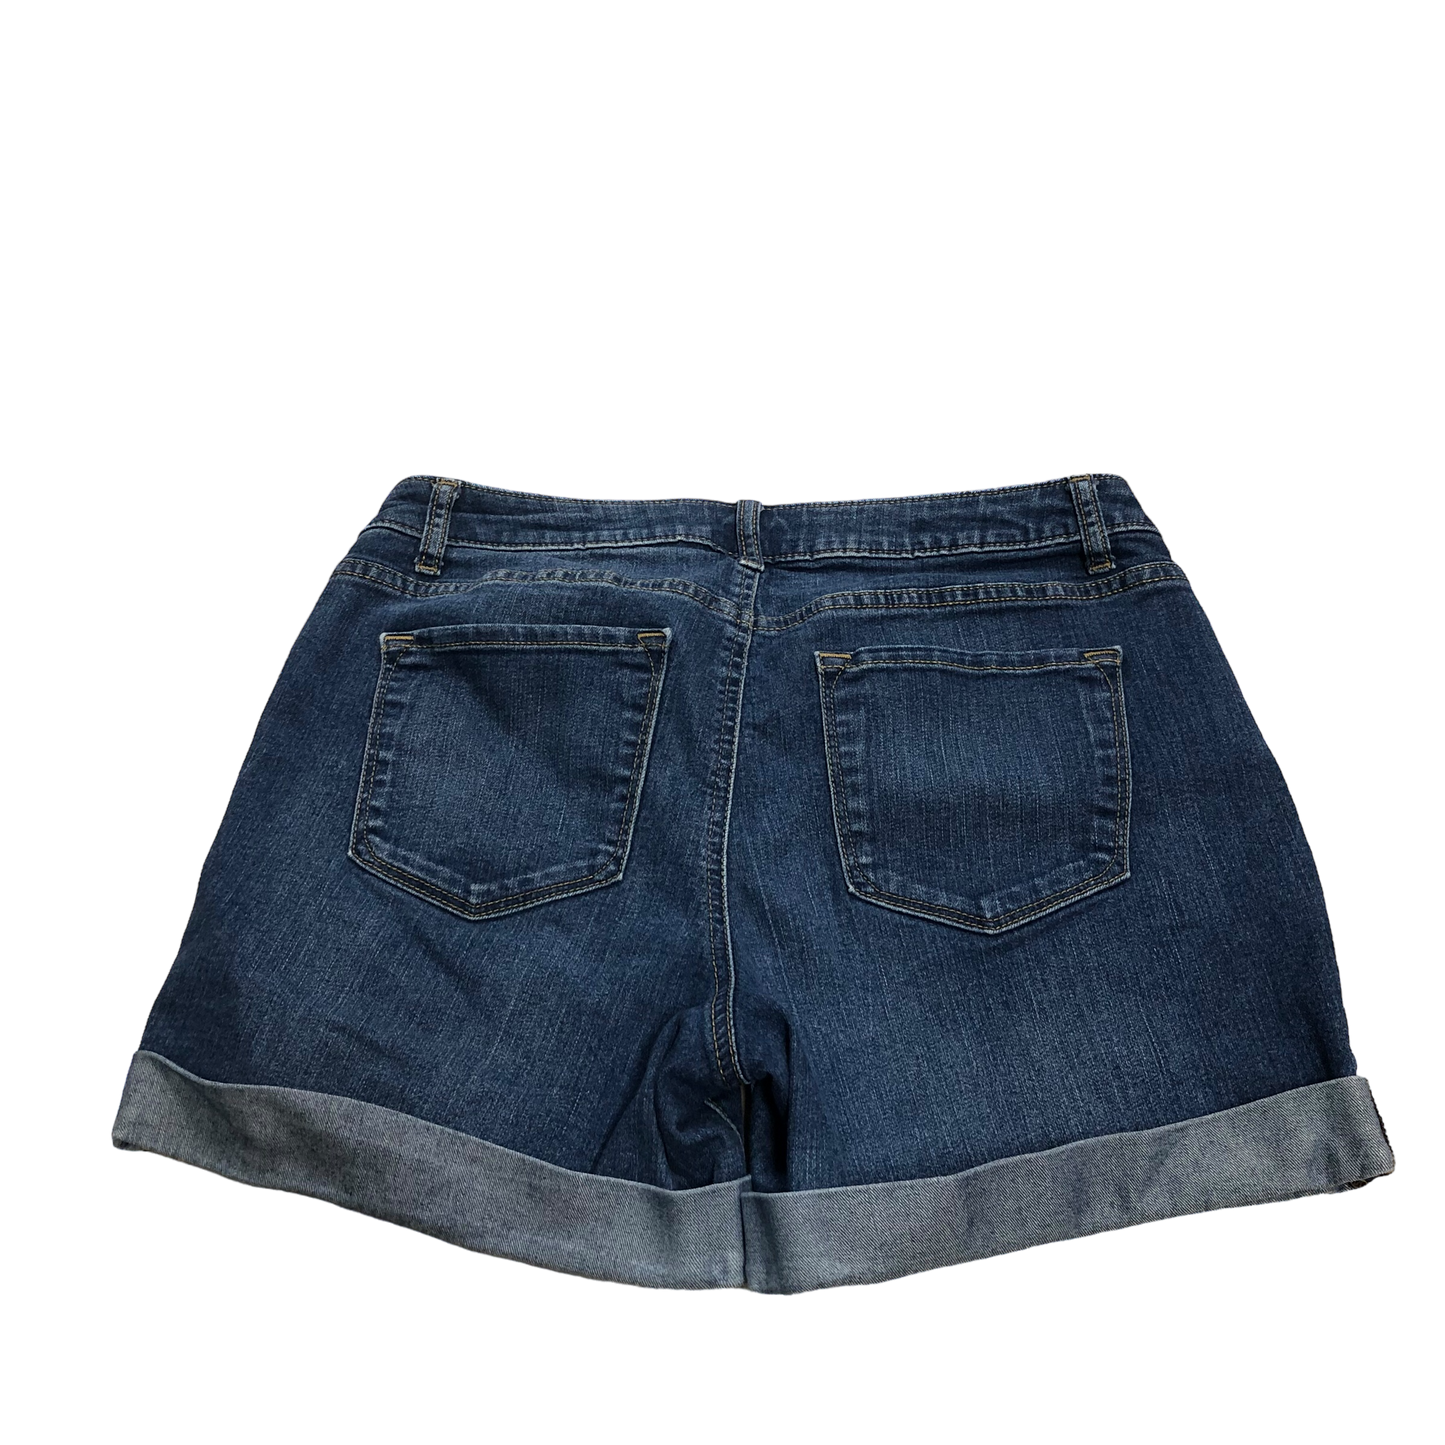 Blue Denim Shorts Apt 9, Size 10